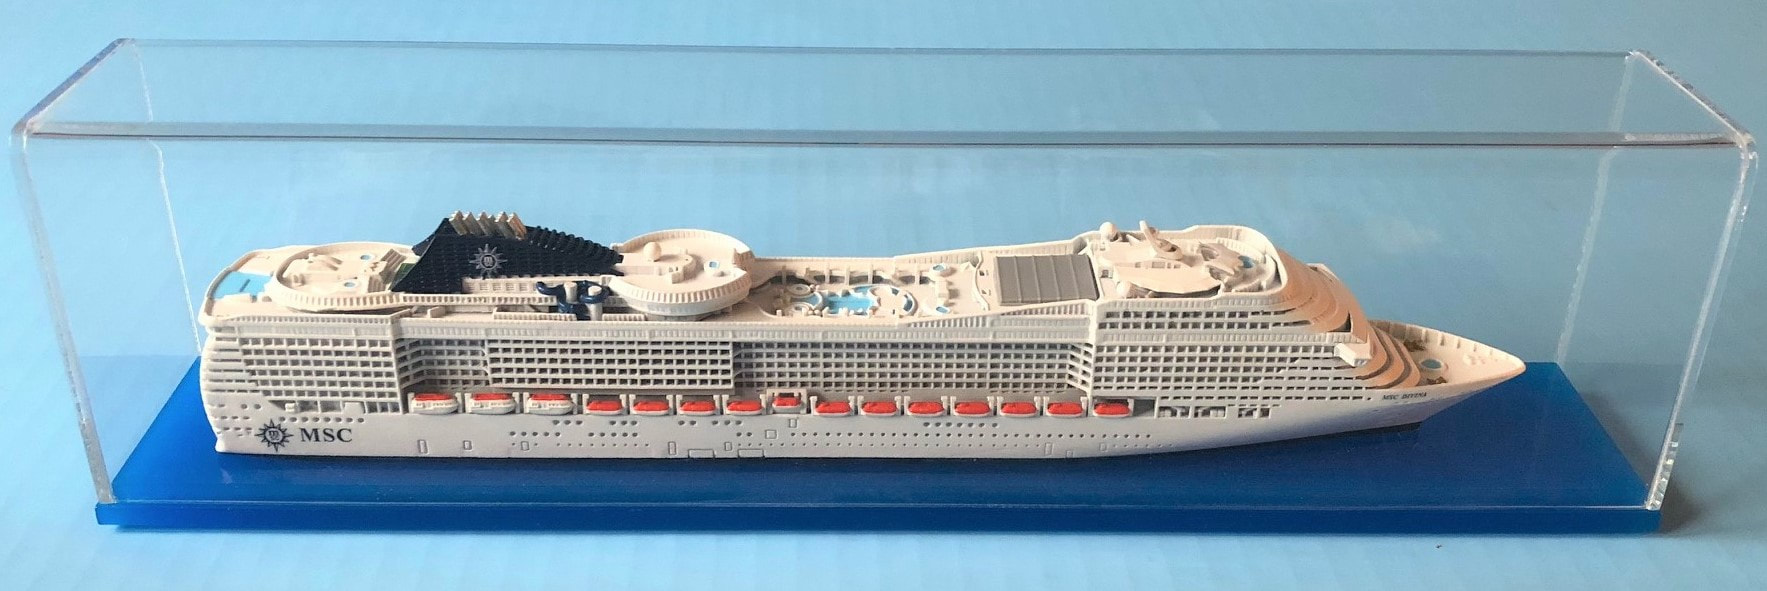 MSC Divina cruise ship model 1:1250 scale Picture